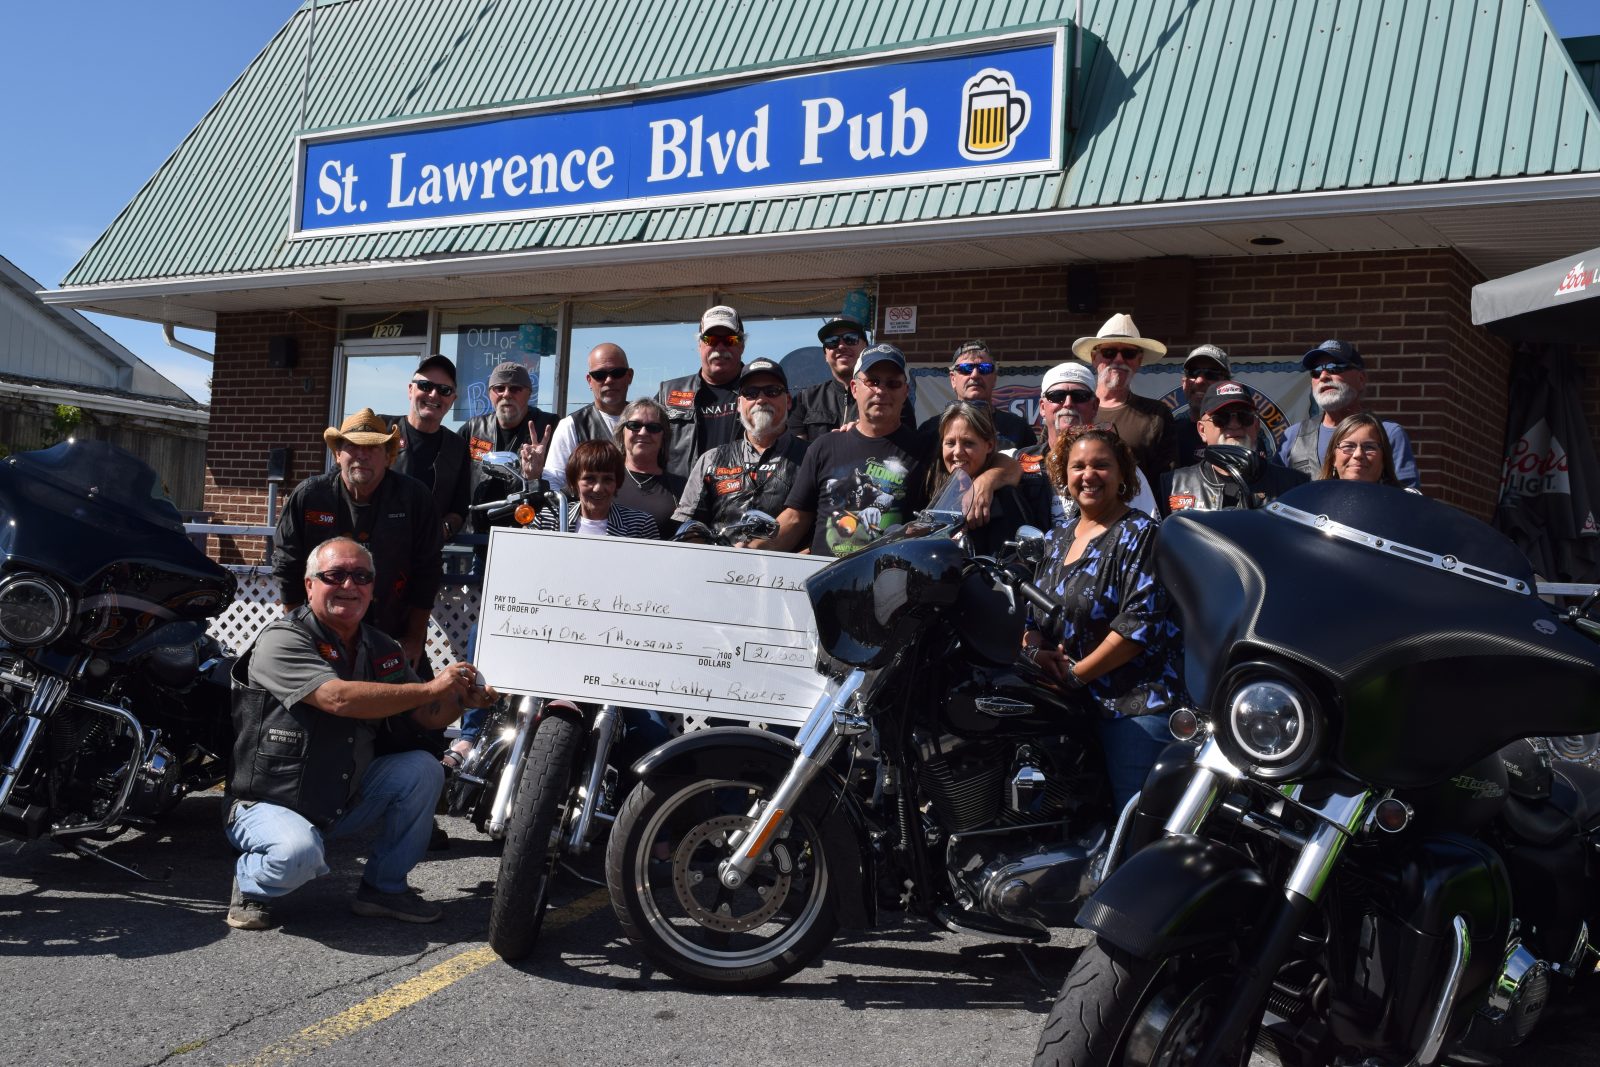 Ride for Hospice raises $21,000